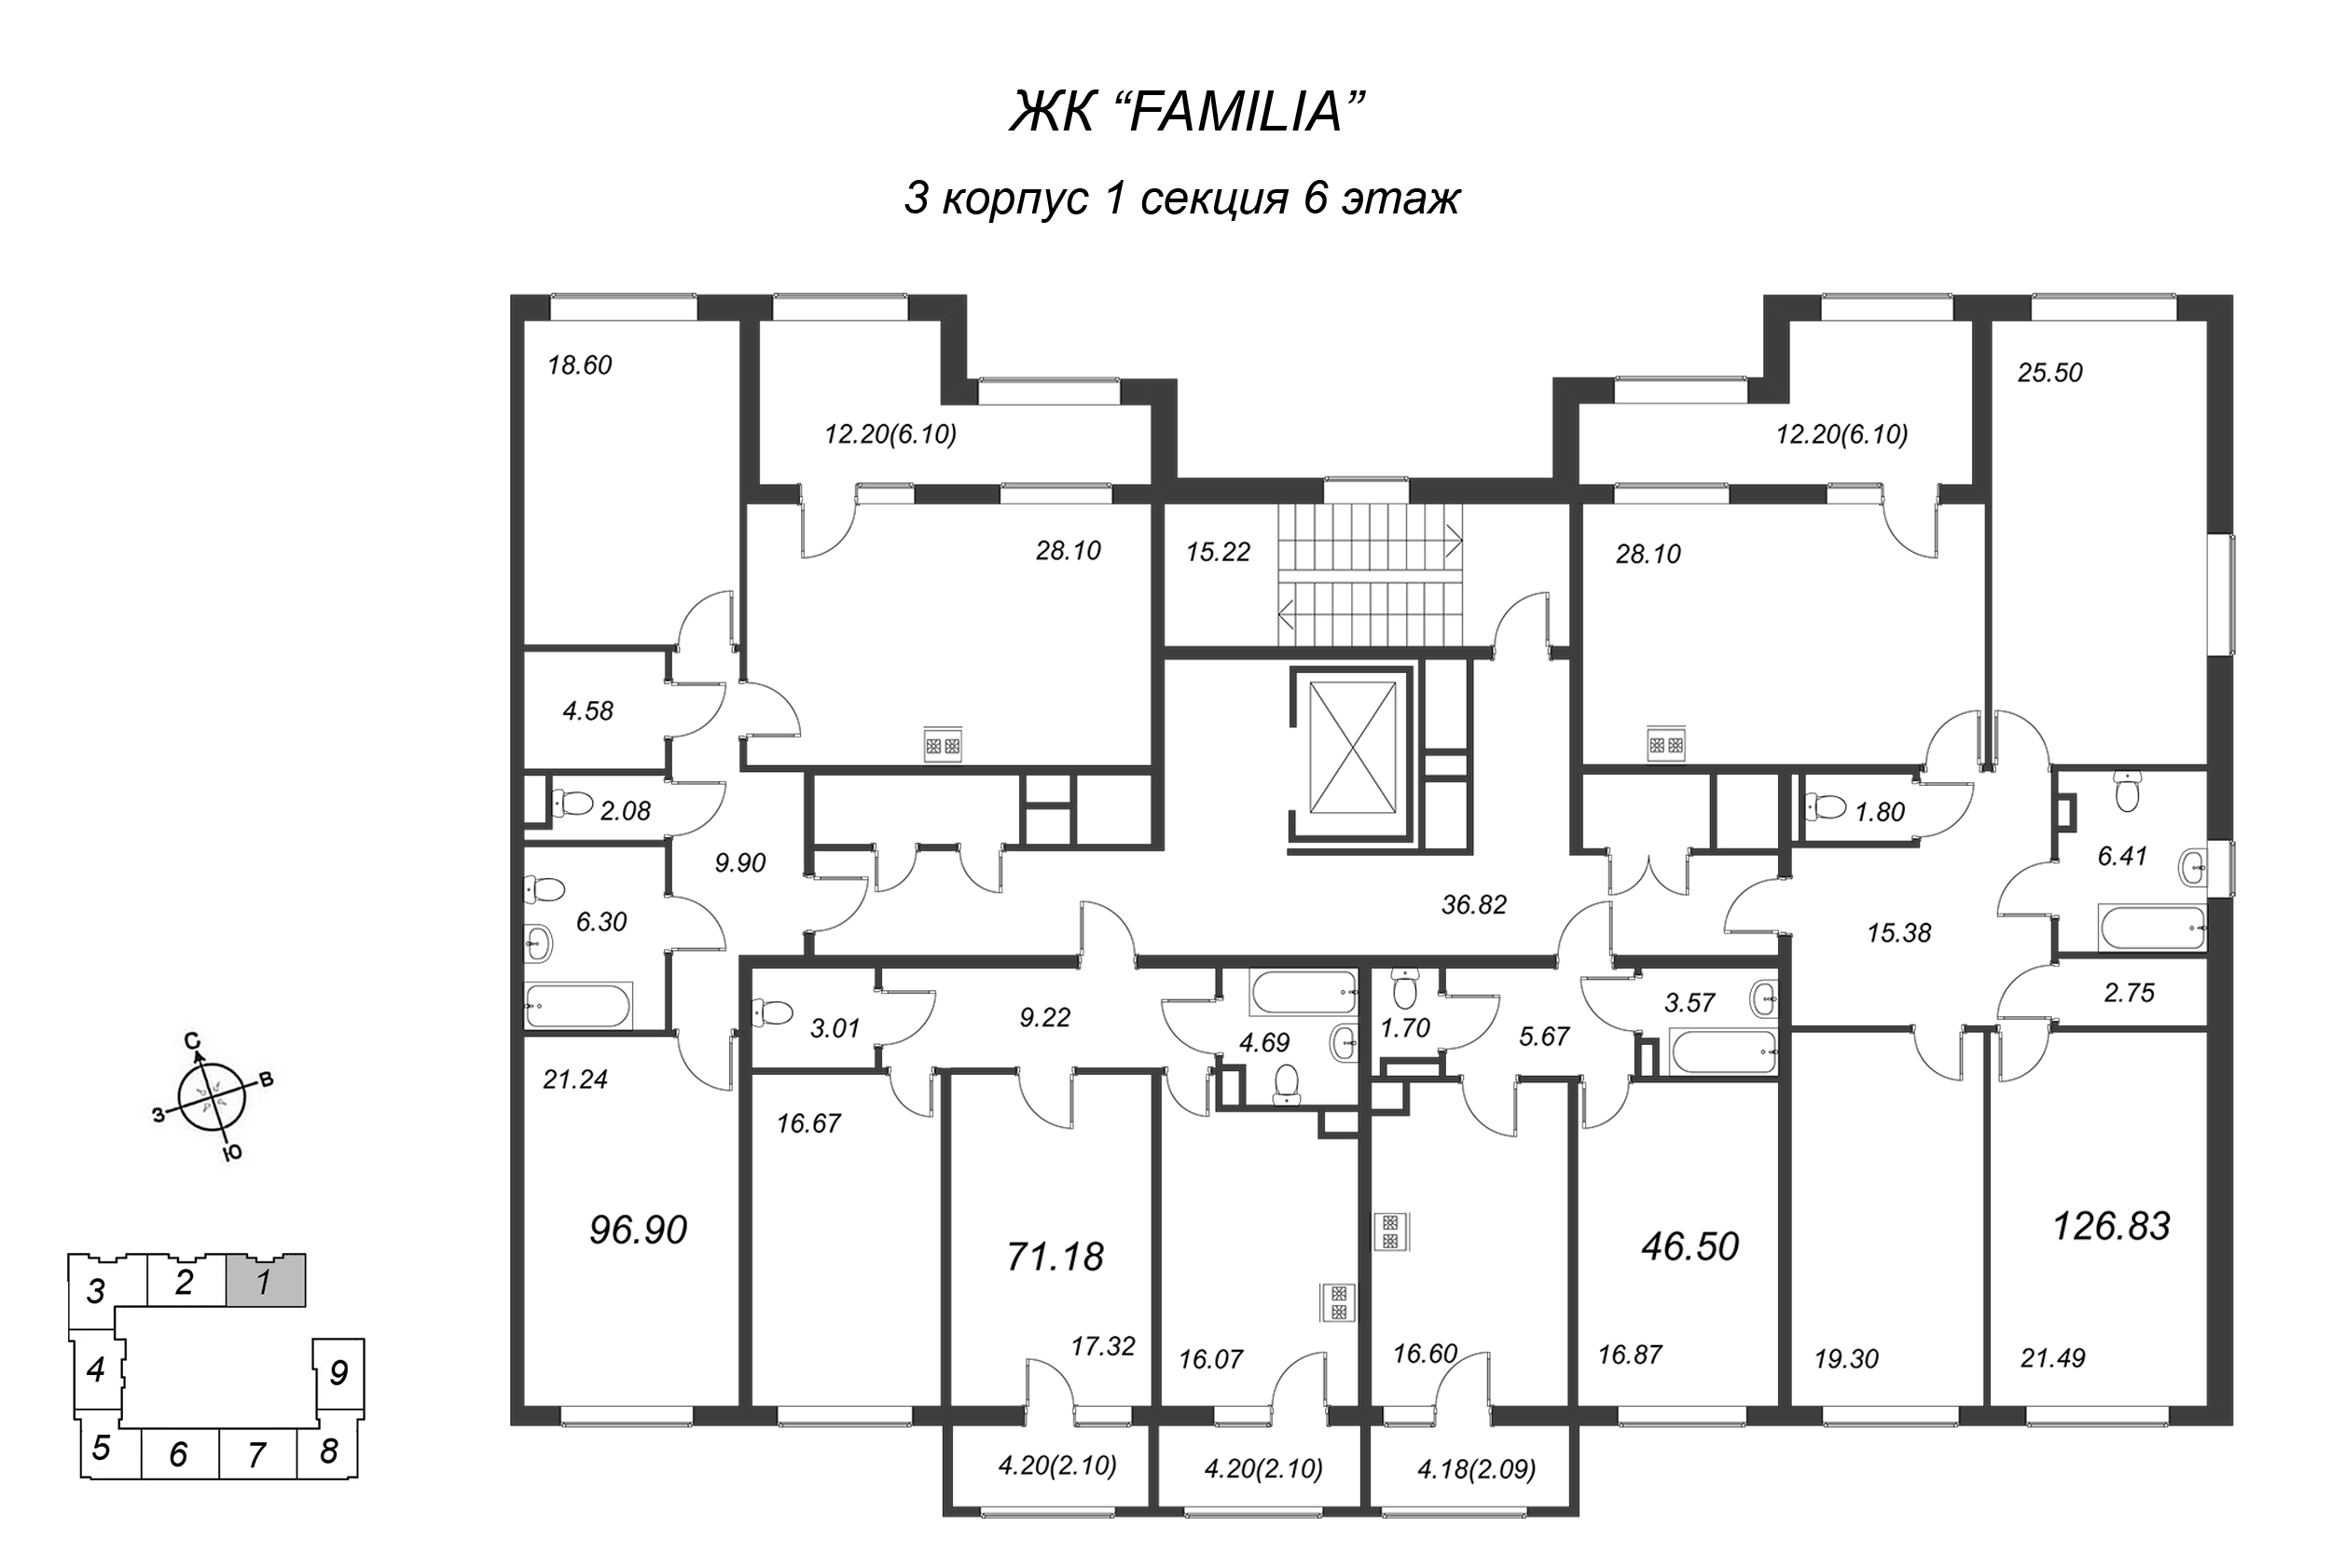 2-комнатная (Евро) квартира, 46.4 м² - планировка этажа